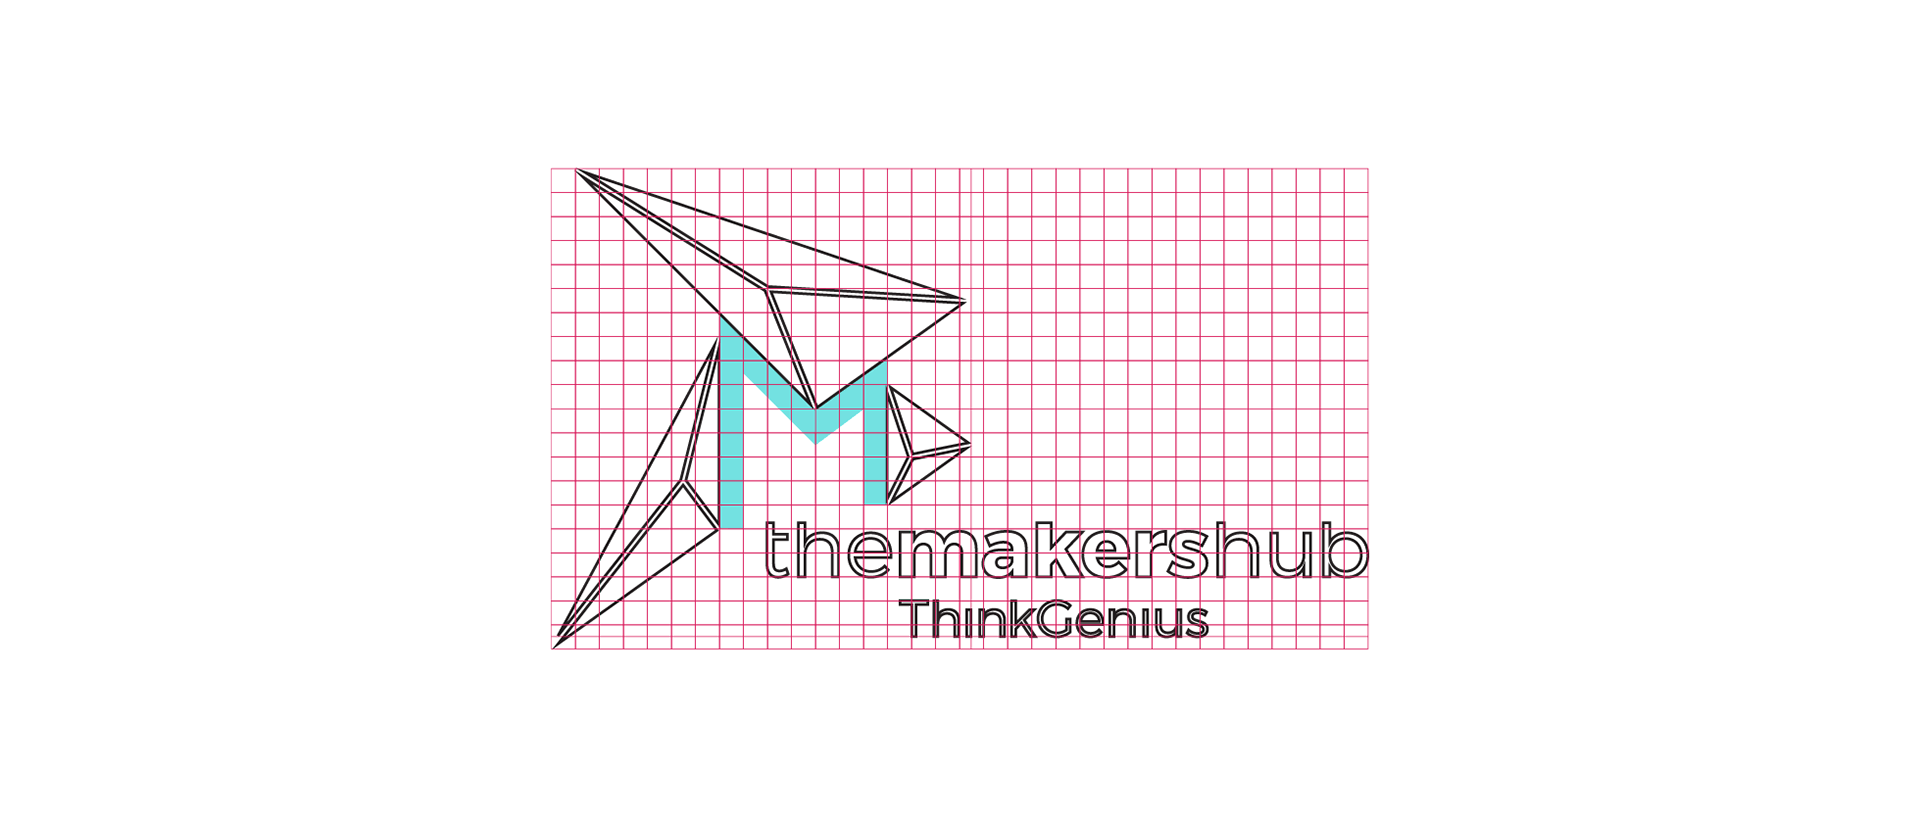 the-makers-hub_brandmark_grid